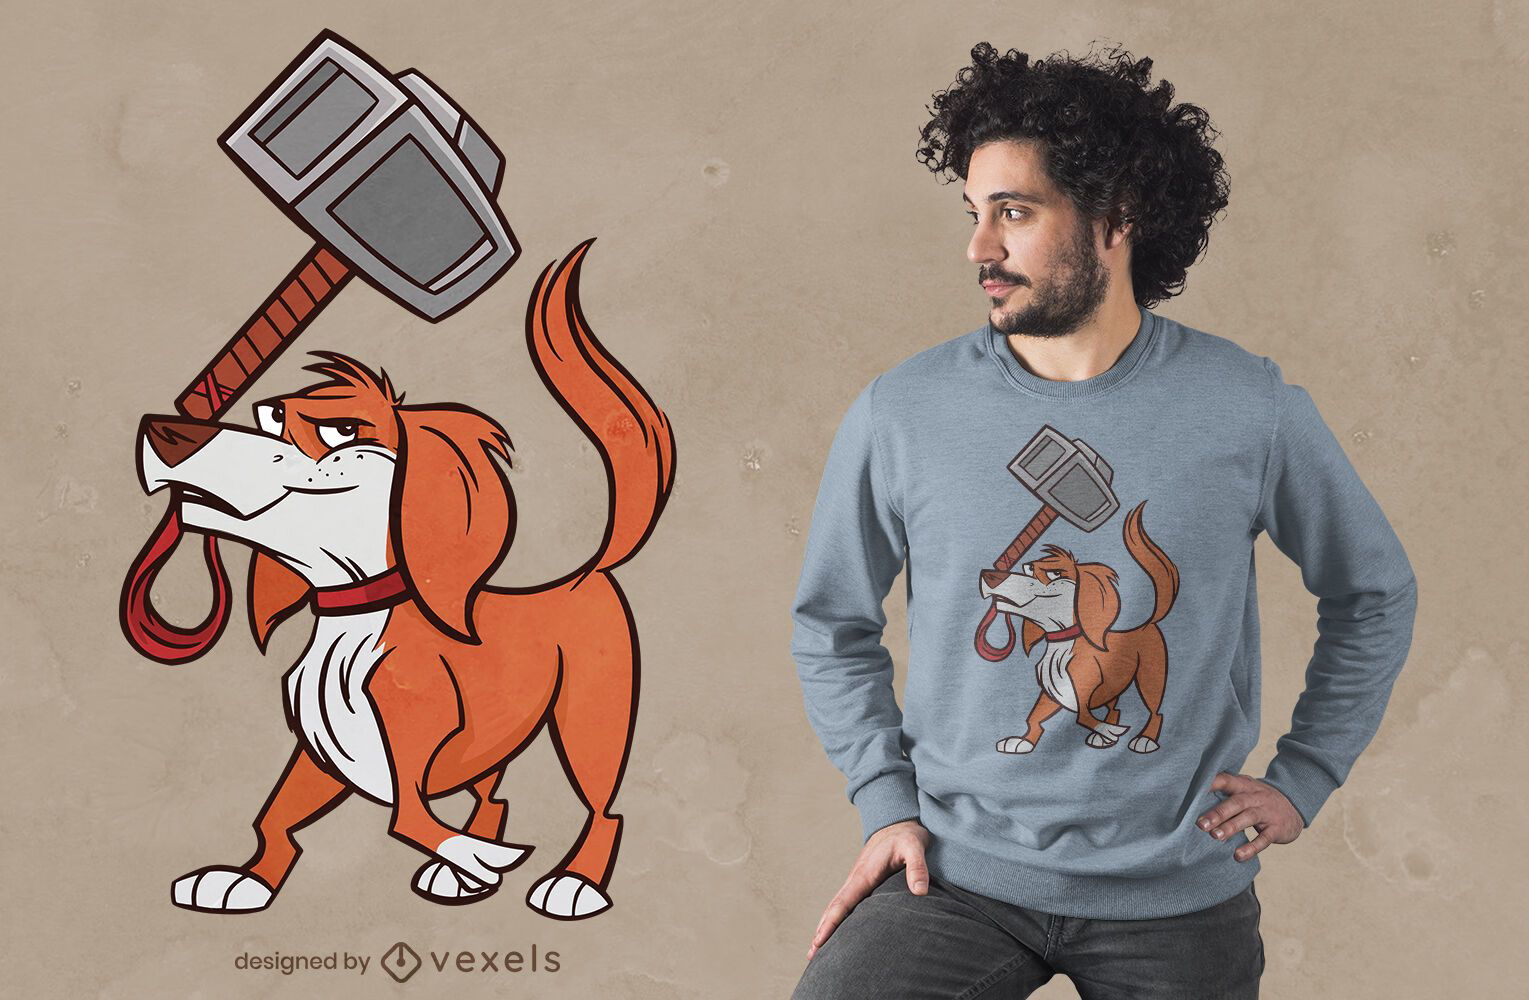 Hammer dog t-shirt design